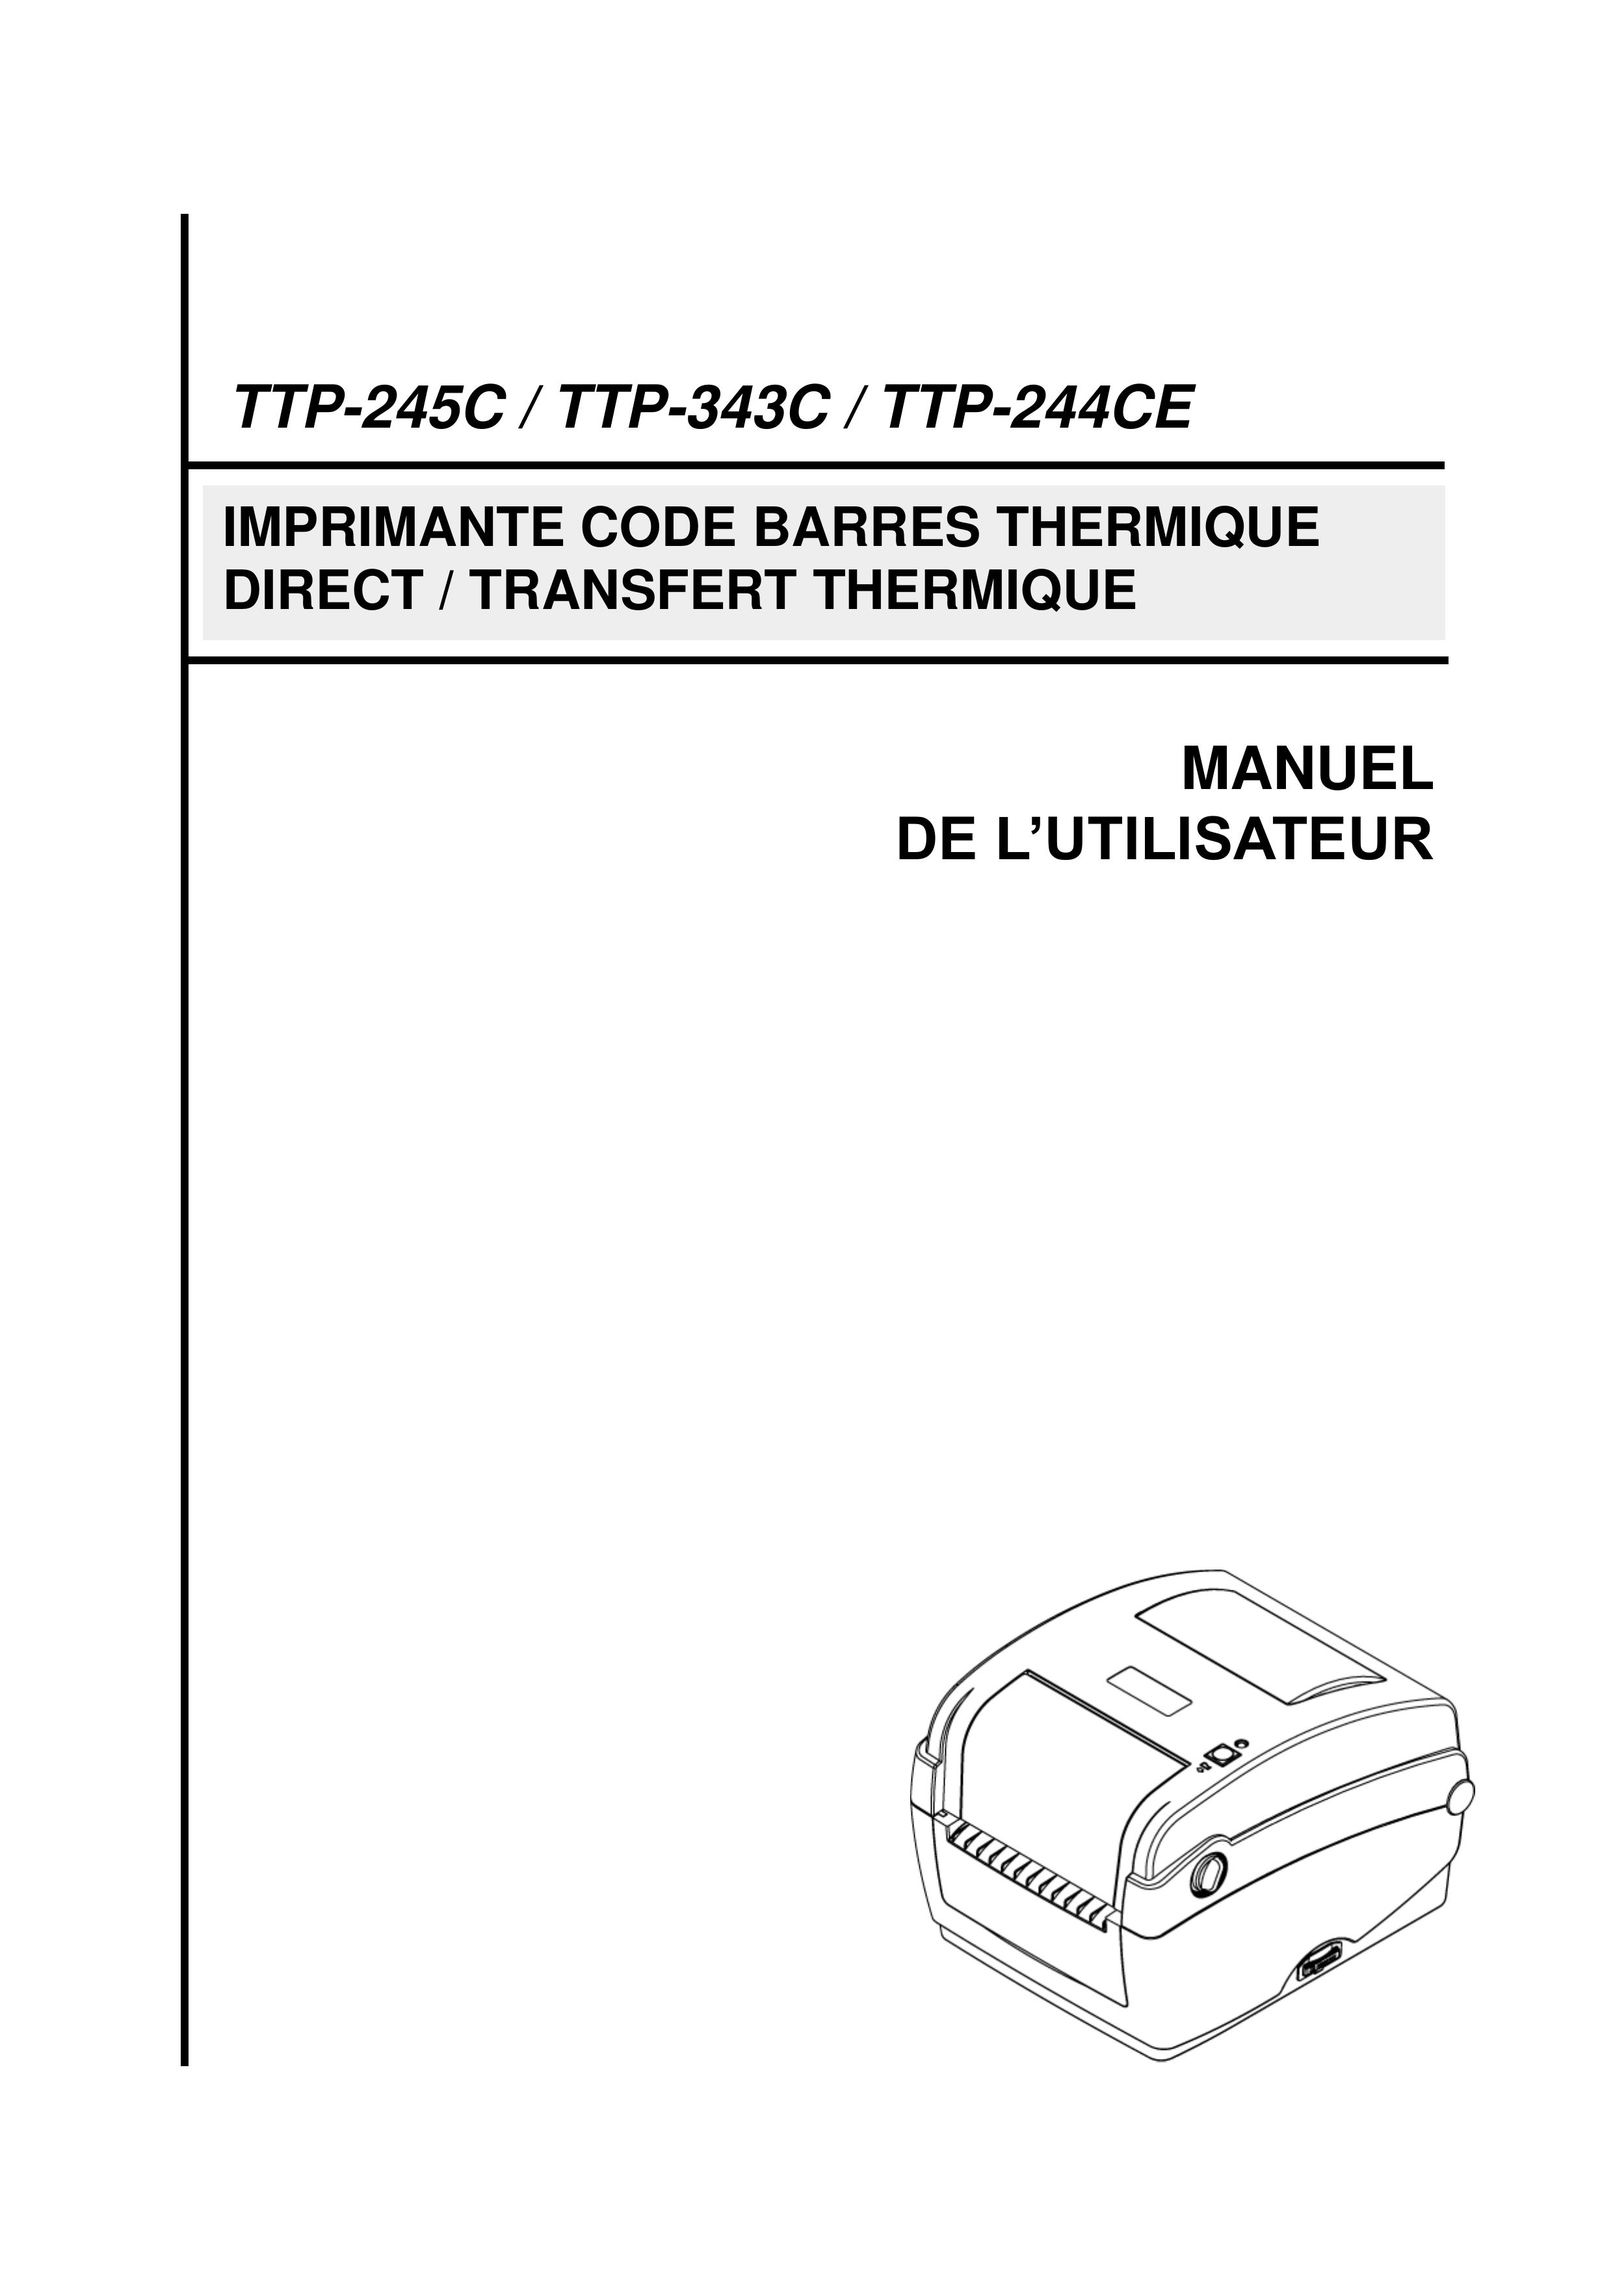 The Speaker Company TTP-245C Label Maker User Manual